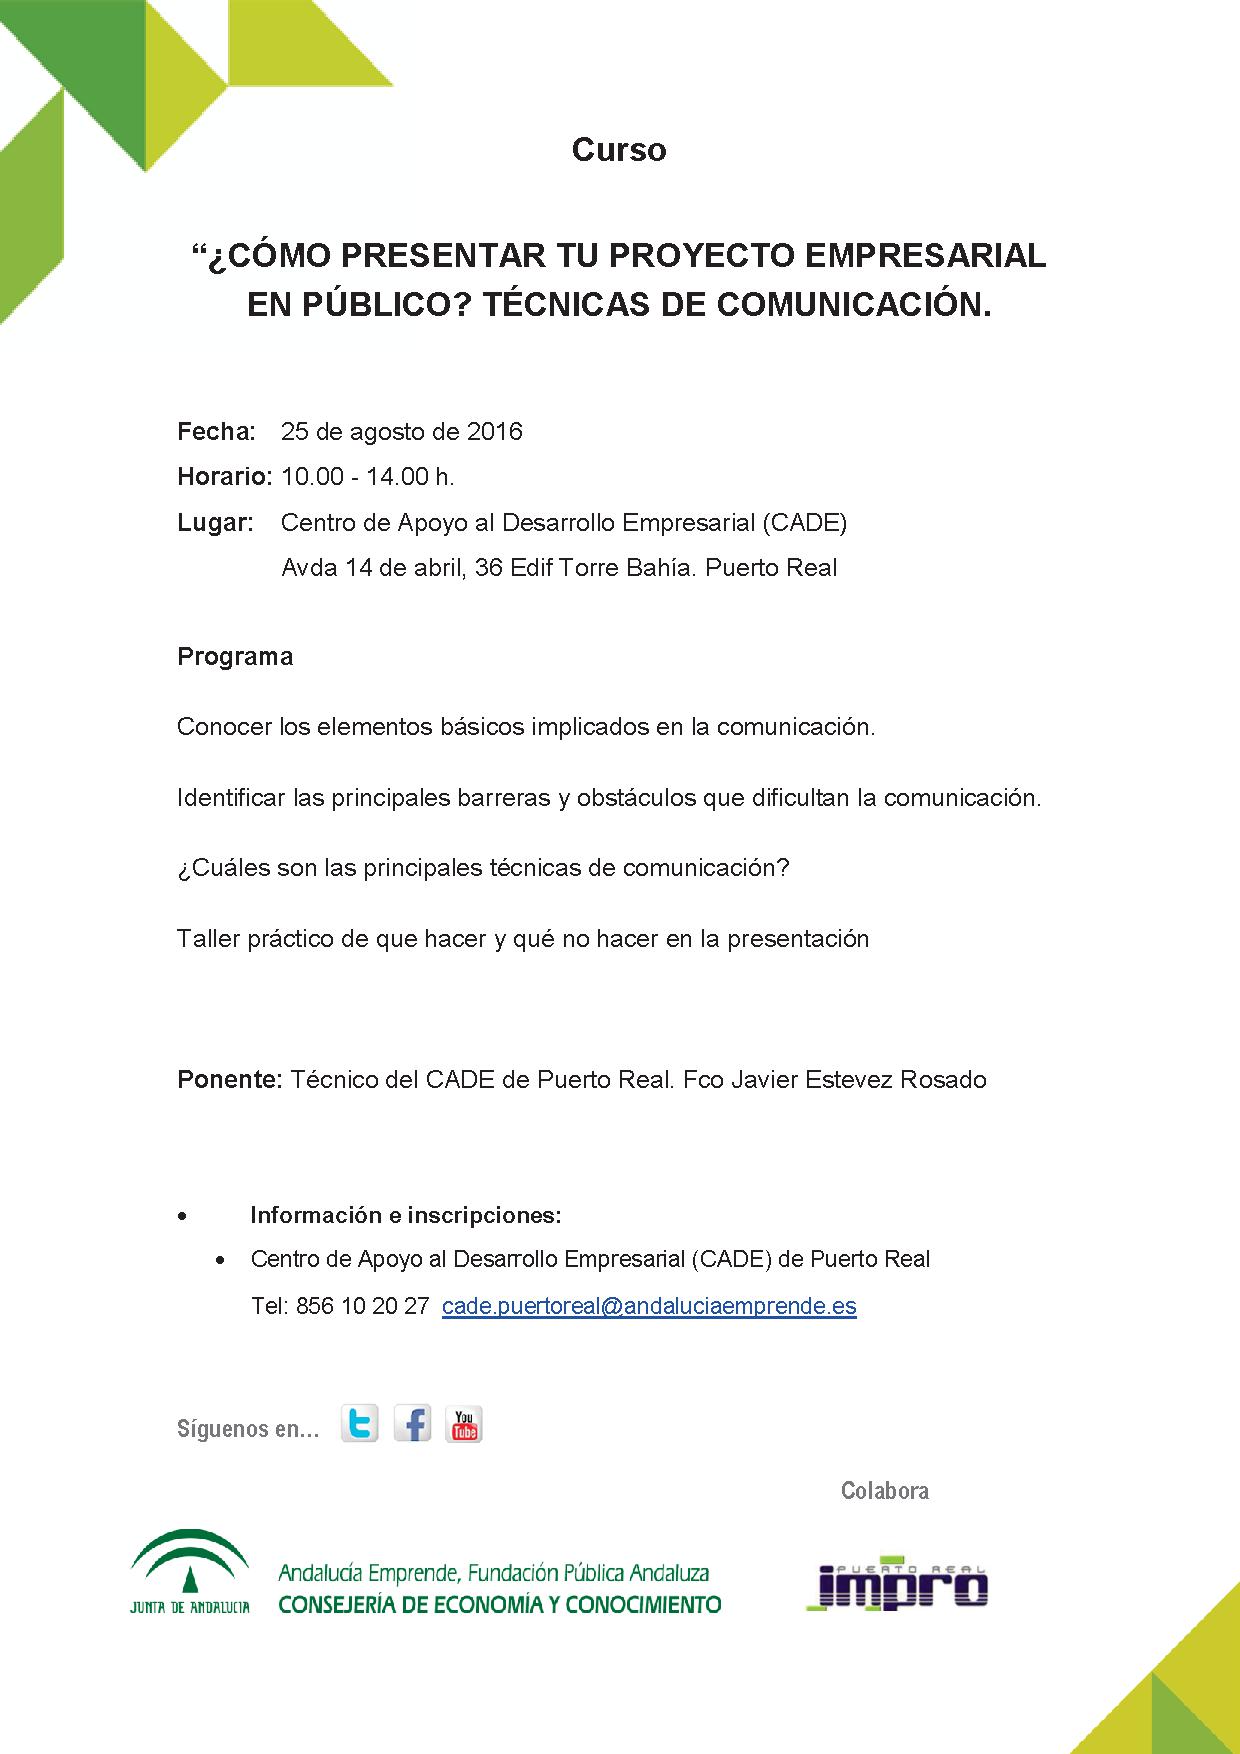 Cómo presentar tu proyecto empresarial en público? Técnicas de comunicación  - Andalucía Emprende, Fundación Pública Andaluza